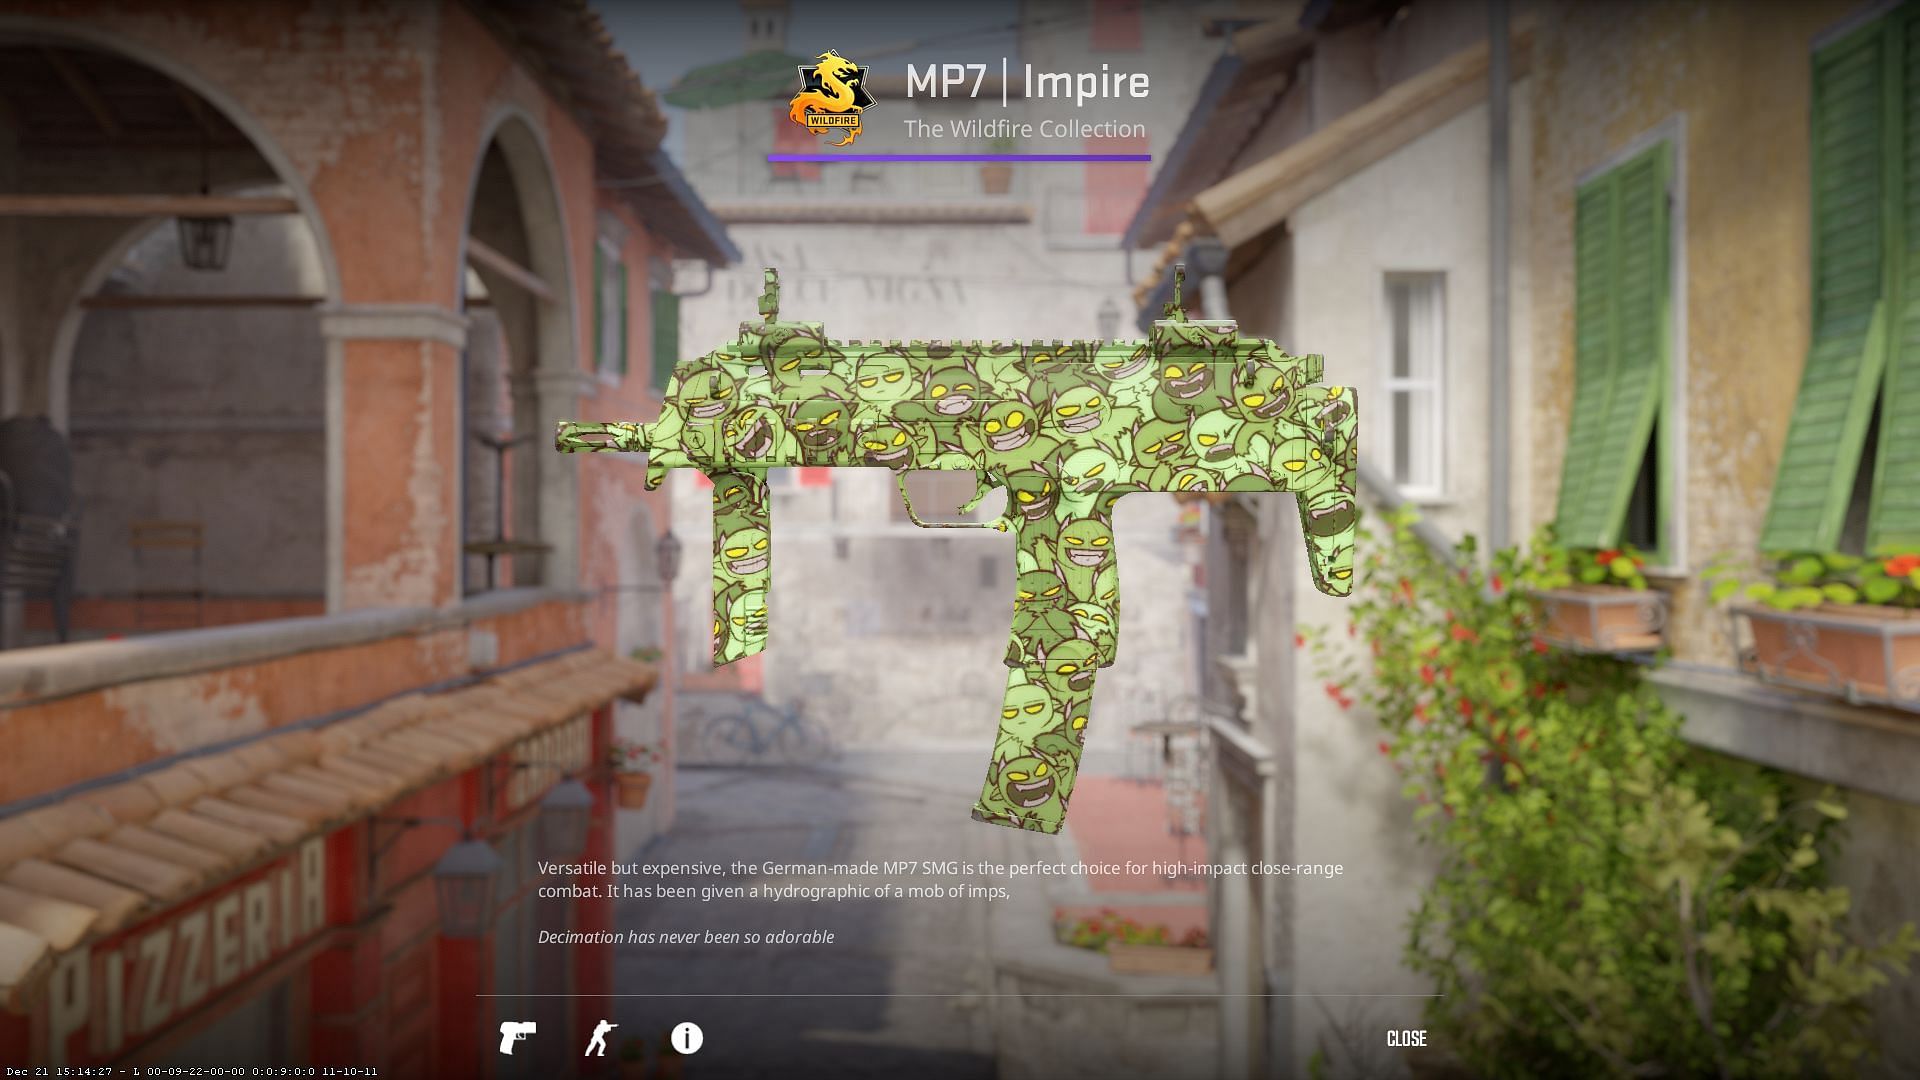 MP7 Impire (Image via Valve)